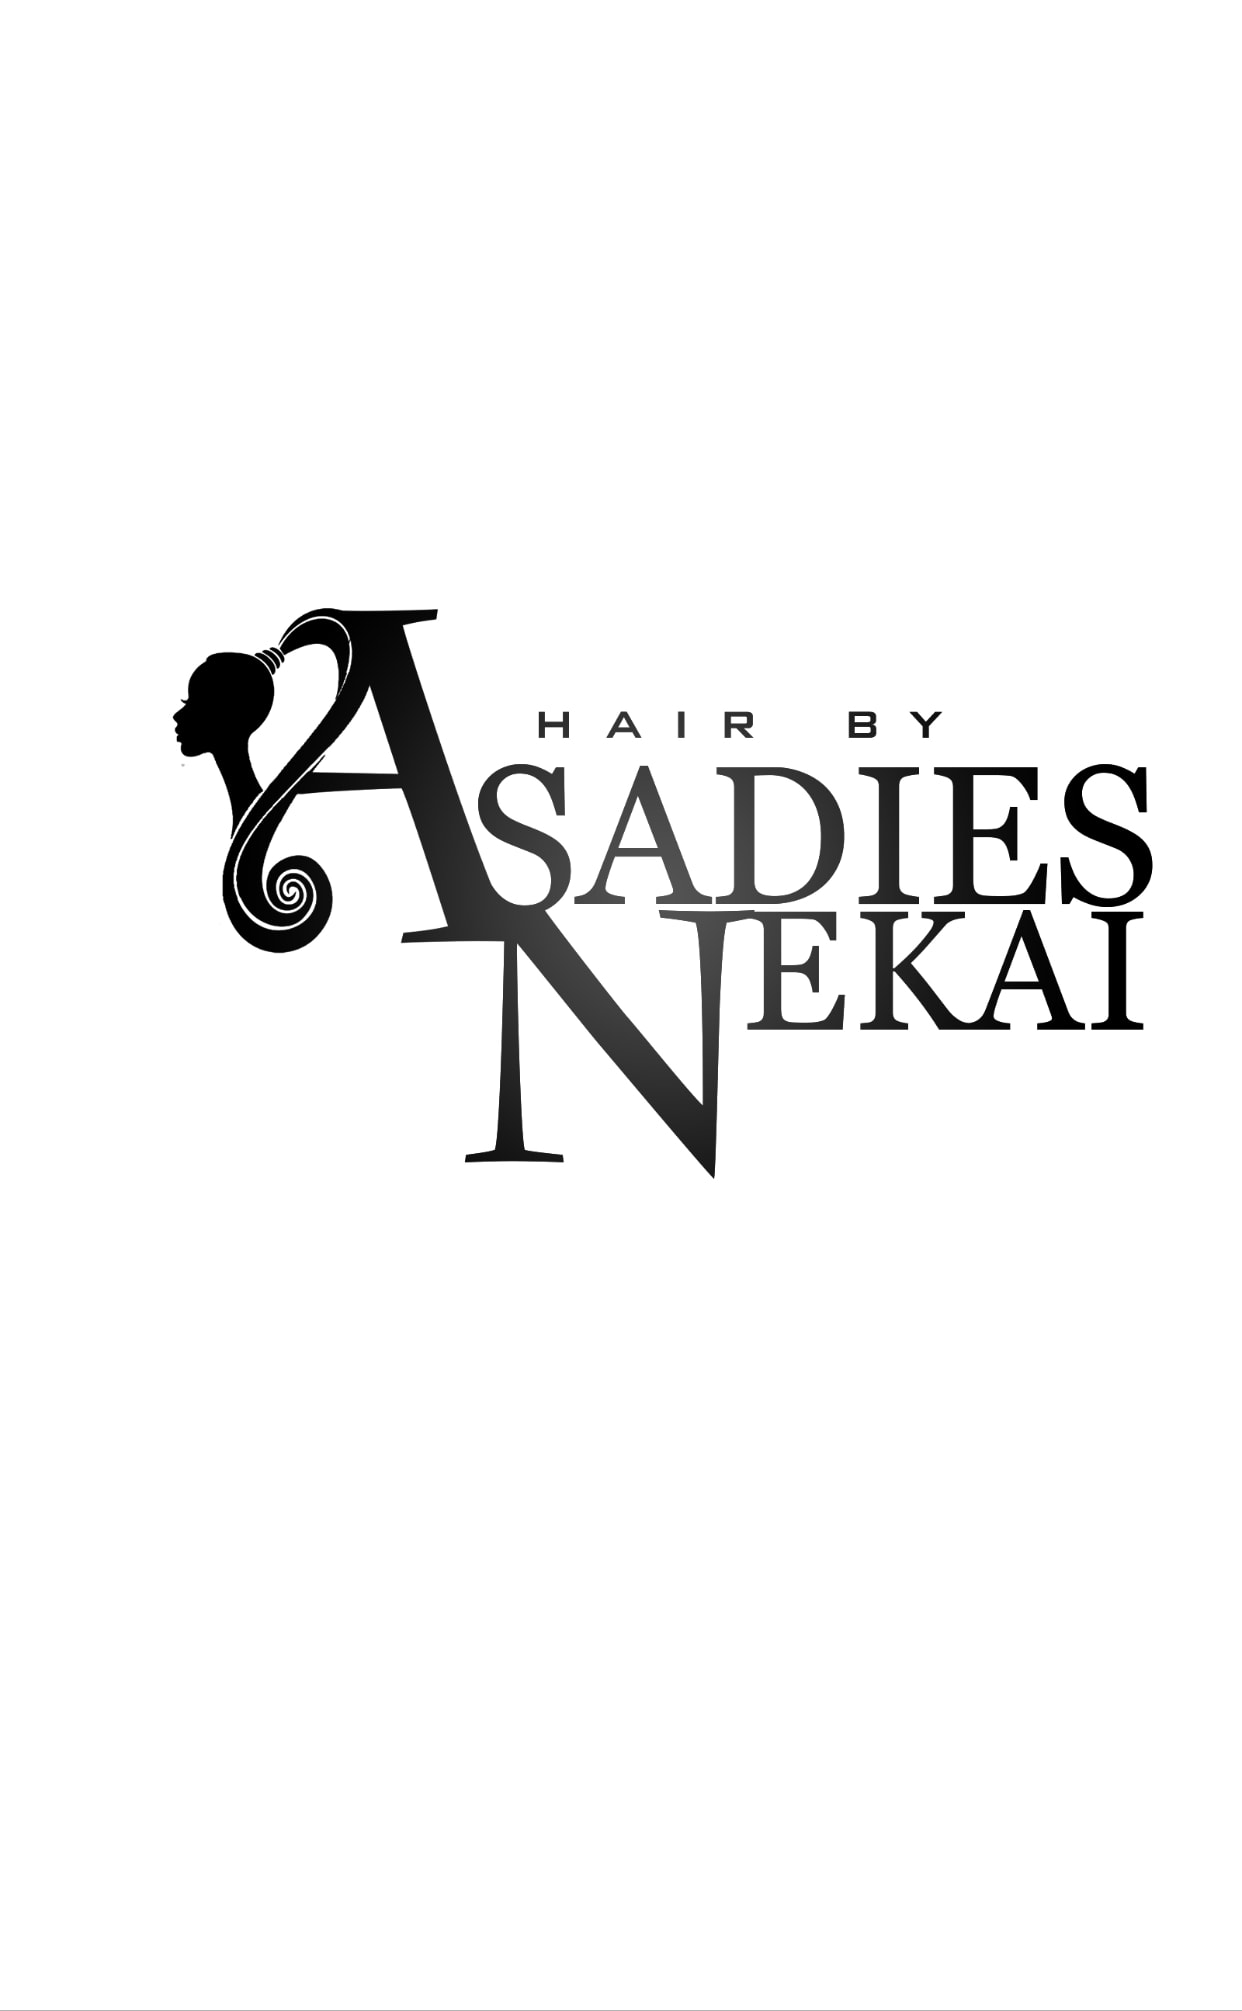 Hair By Asadies Nekai